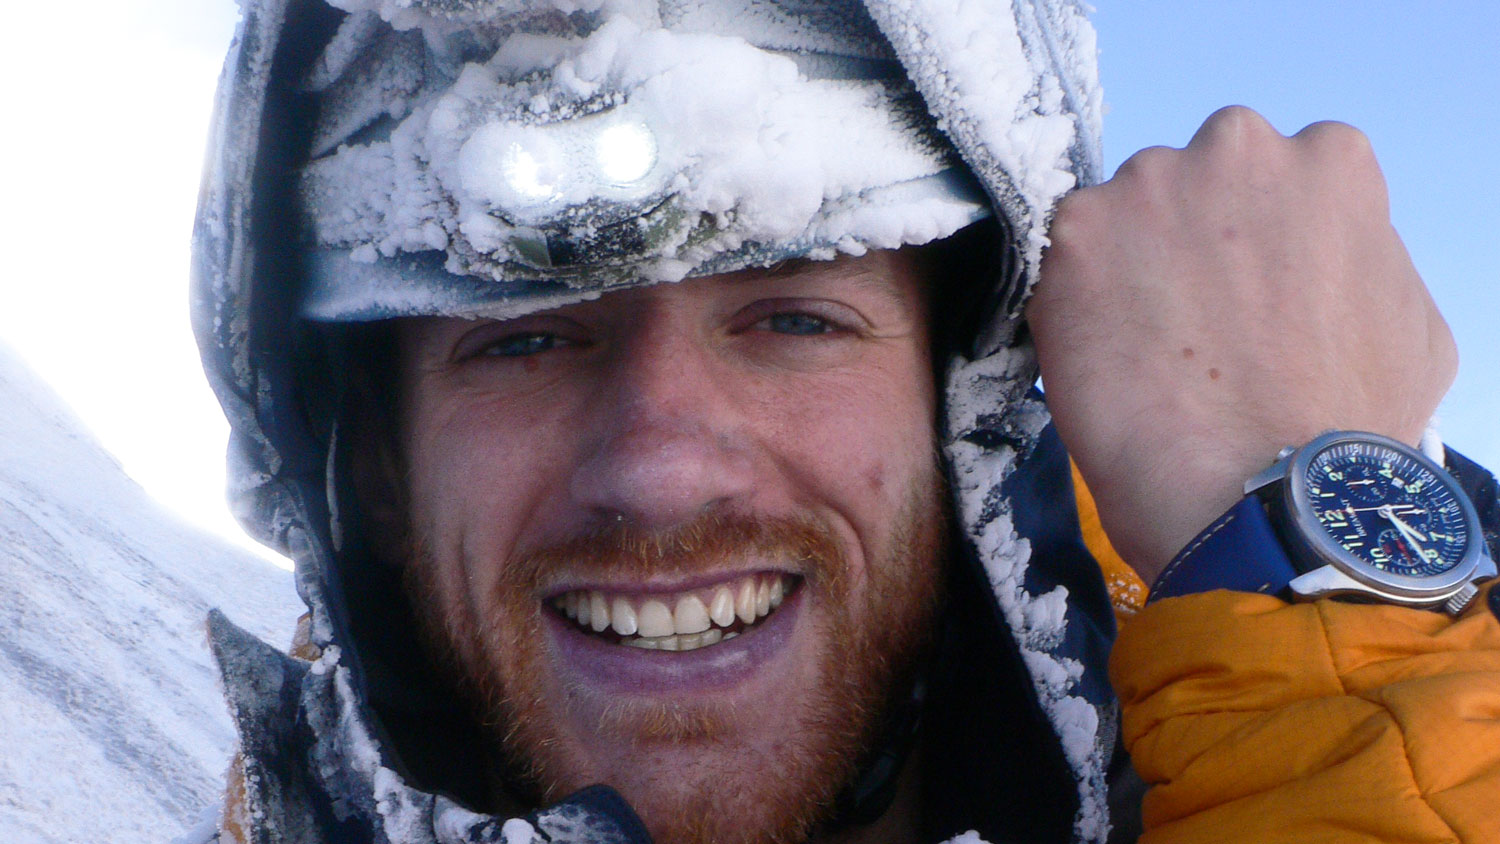 interview mountain climber jake meyer alt1p on chimborazo ecuador climjber